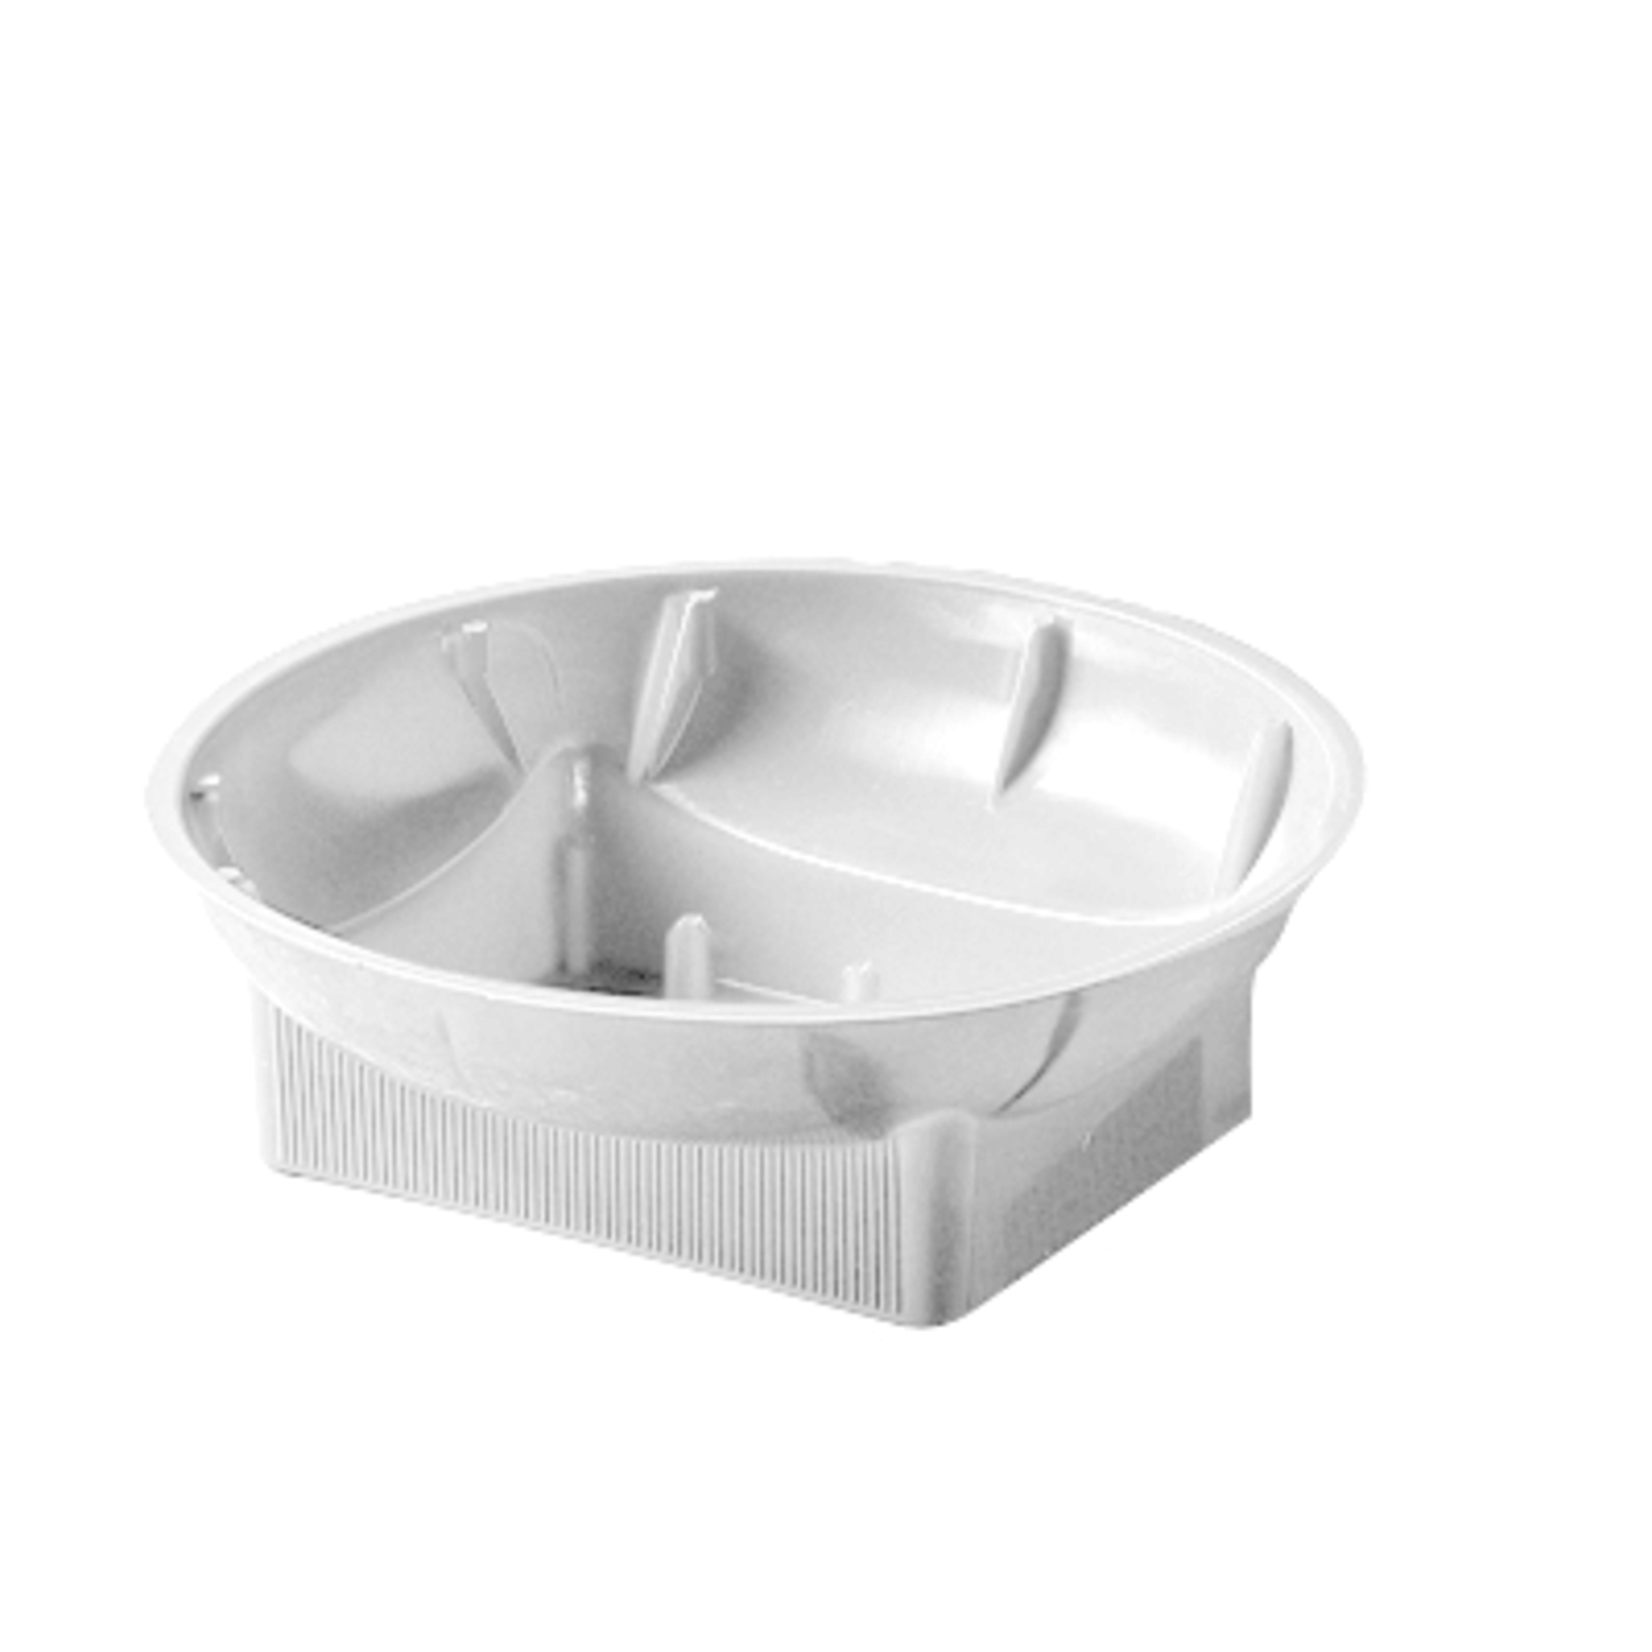 6"" Single Design Bowl - White